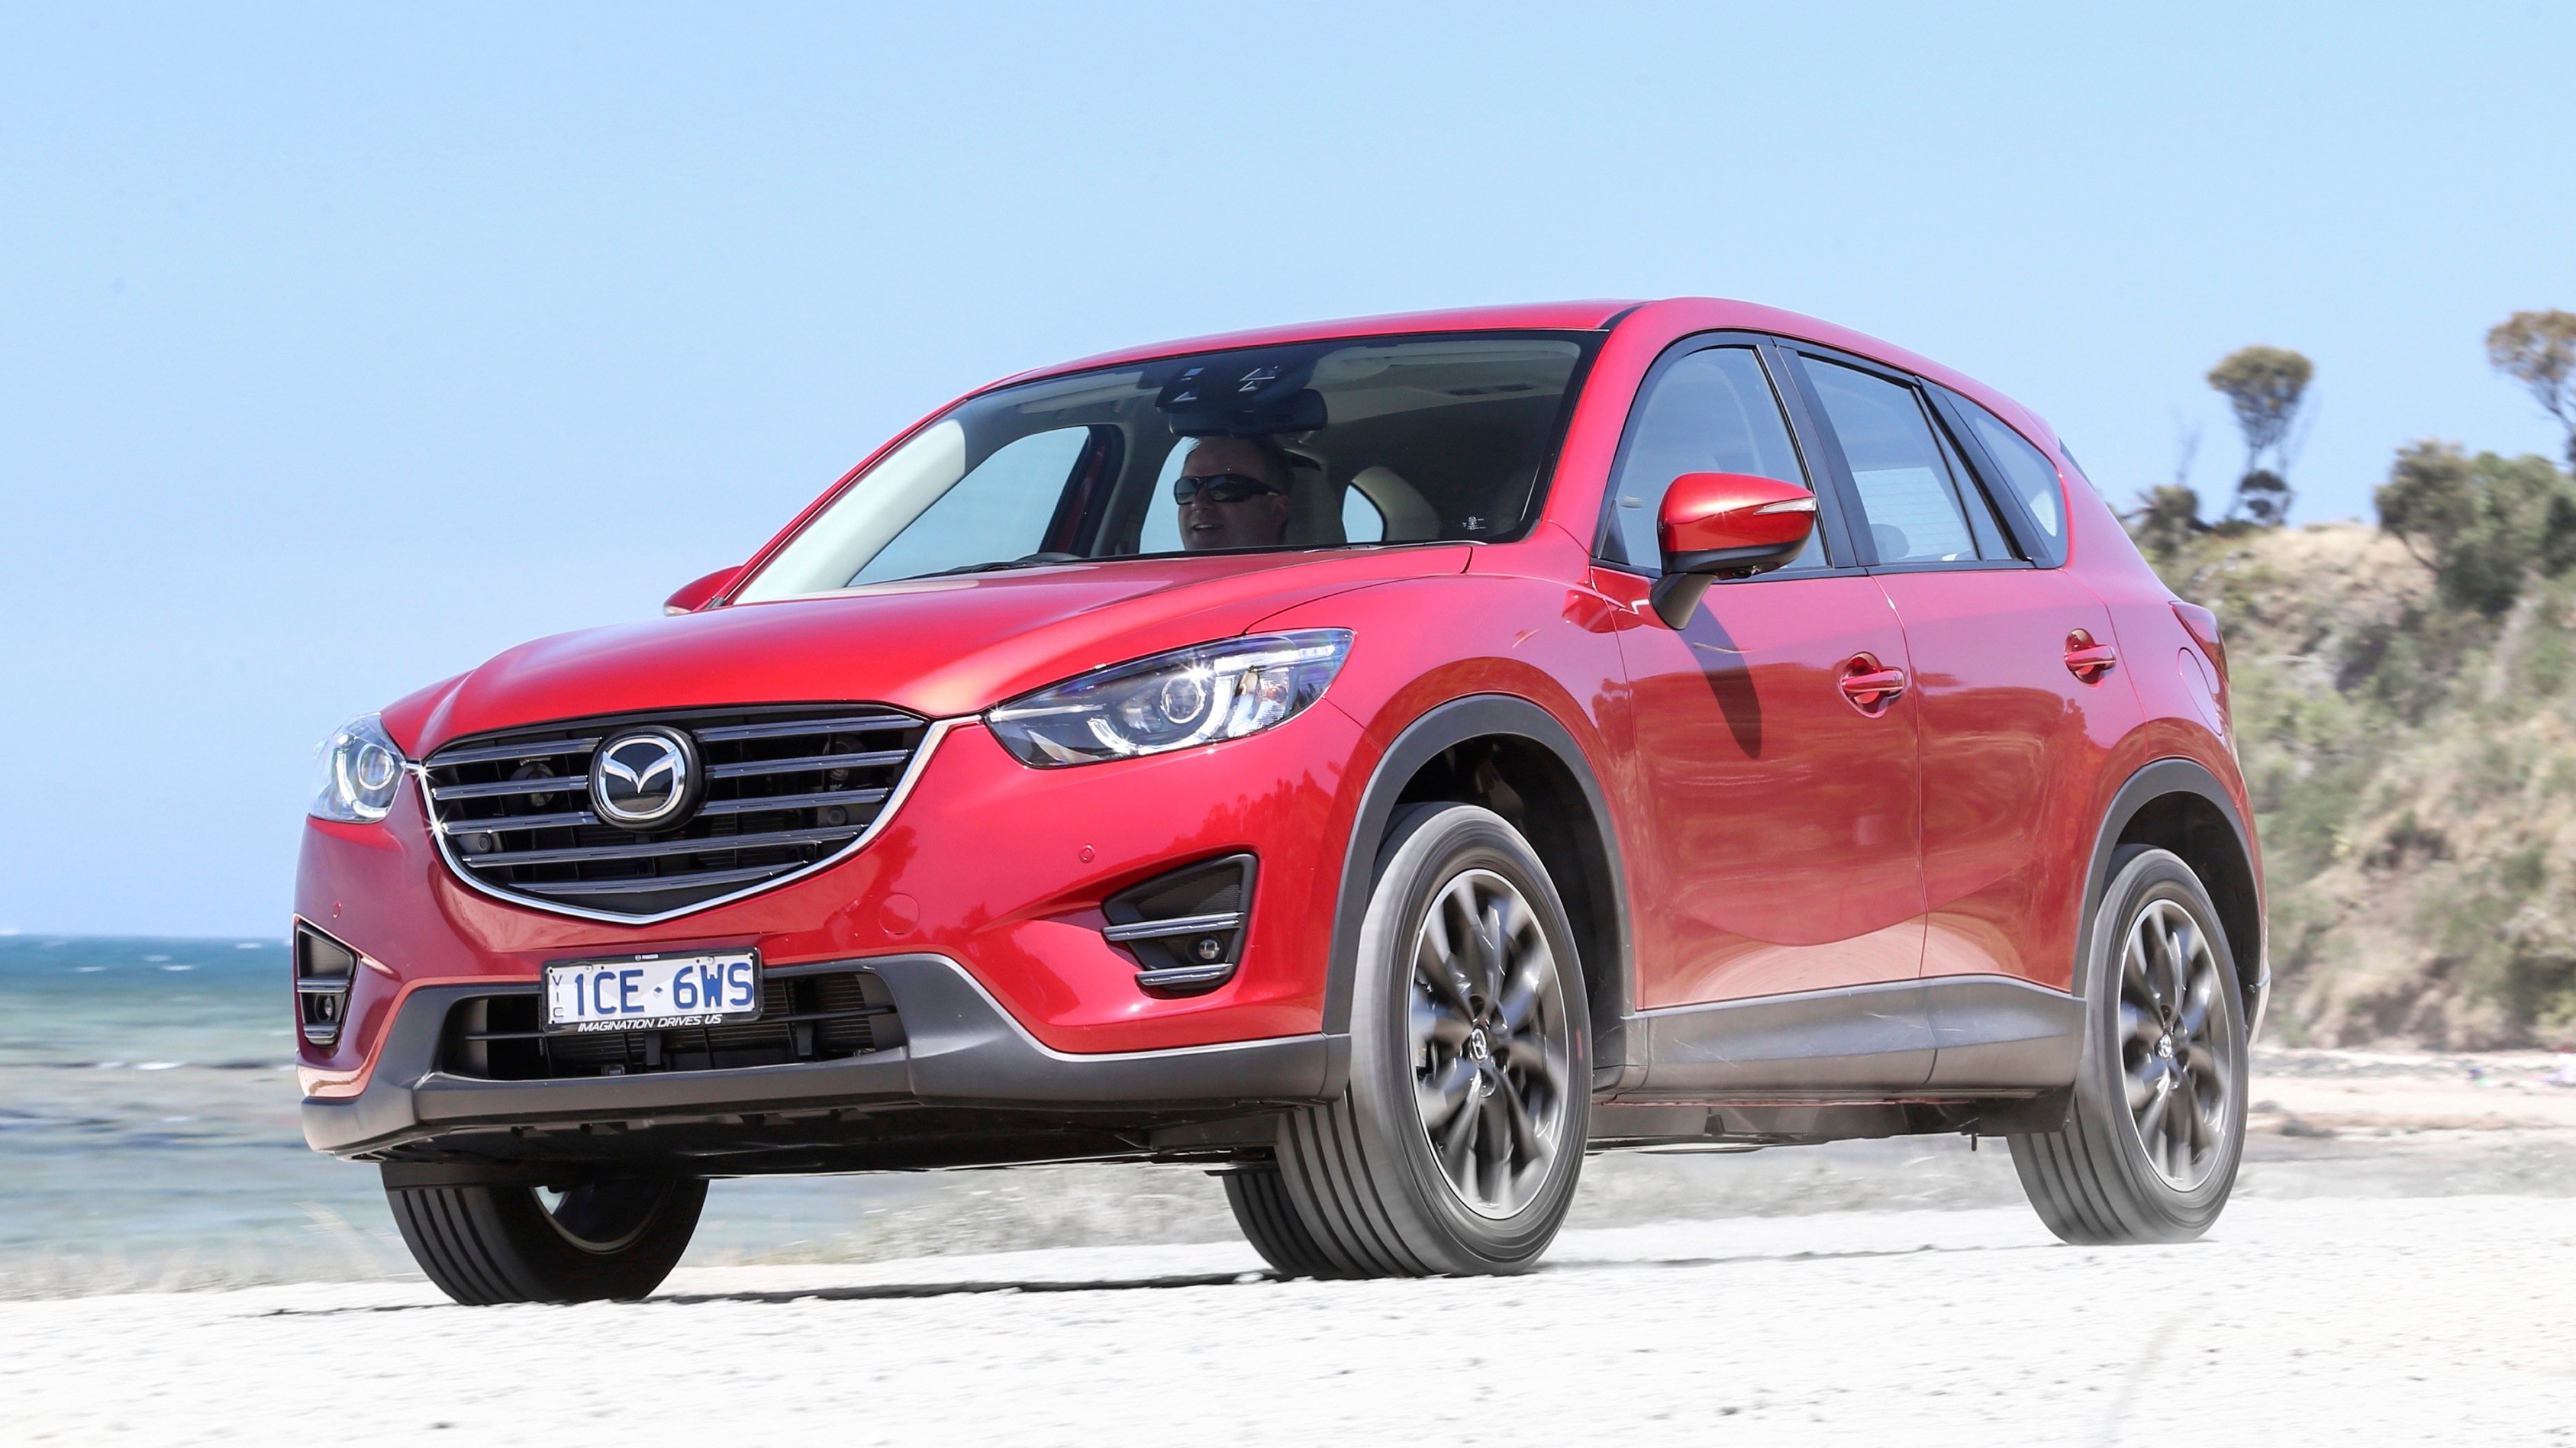 2015 Mazda CX-5 Review | CarAdvice